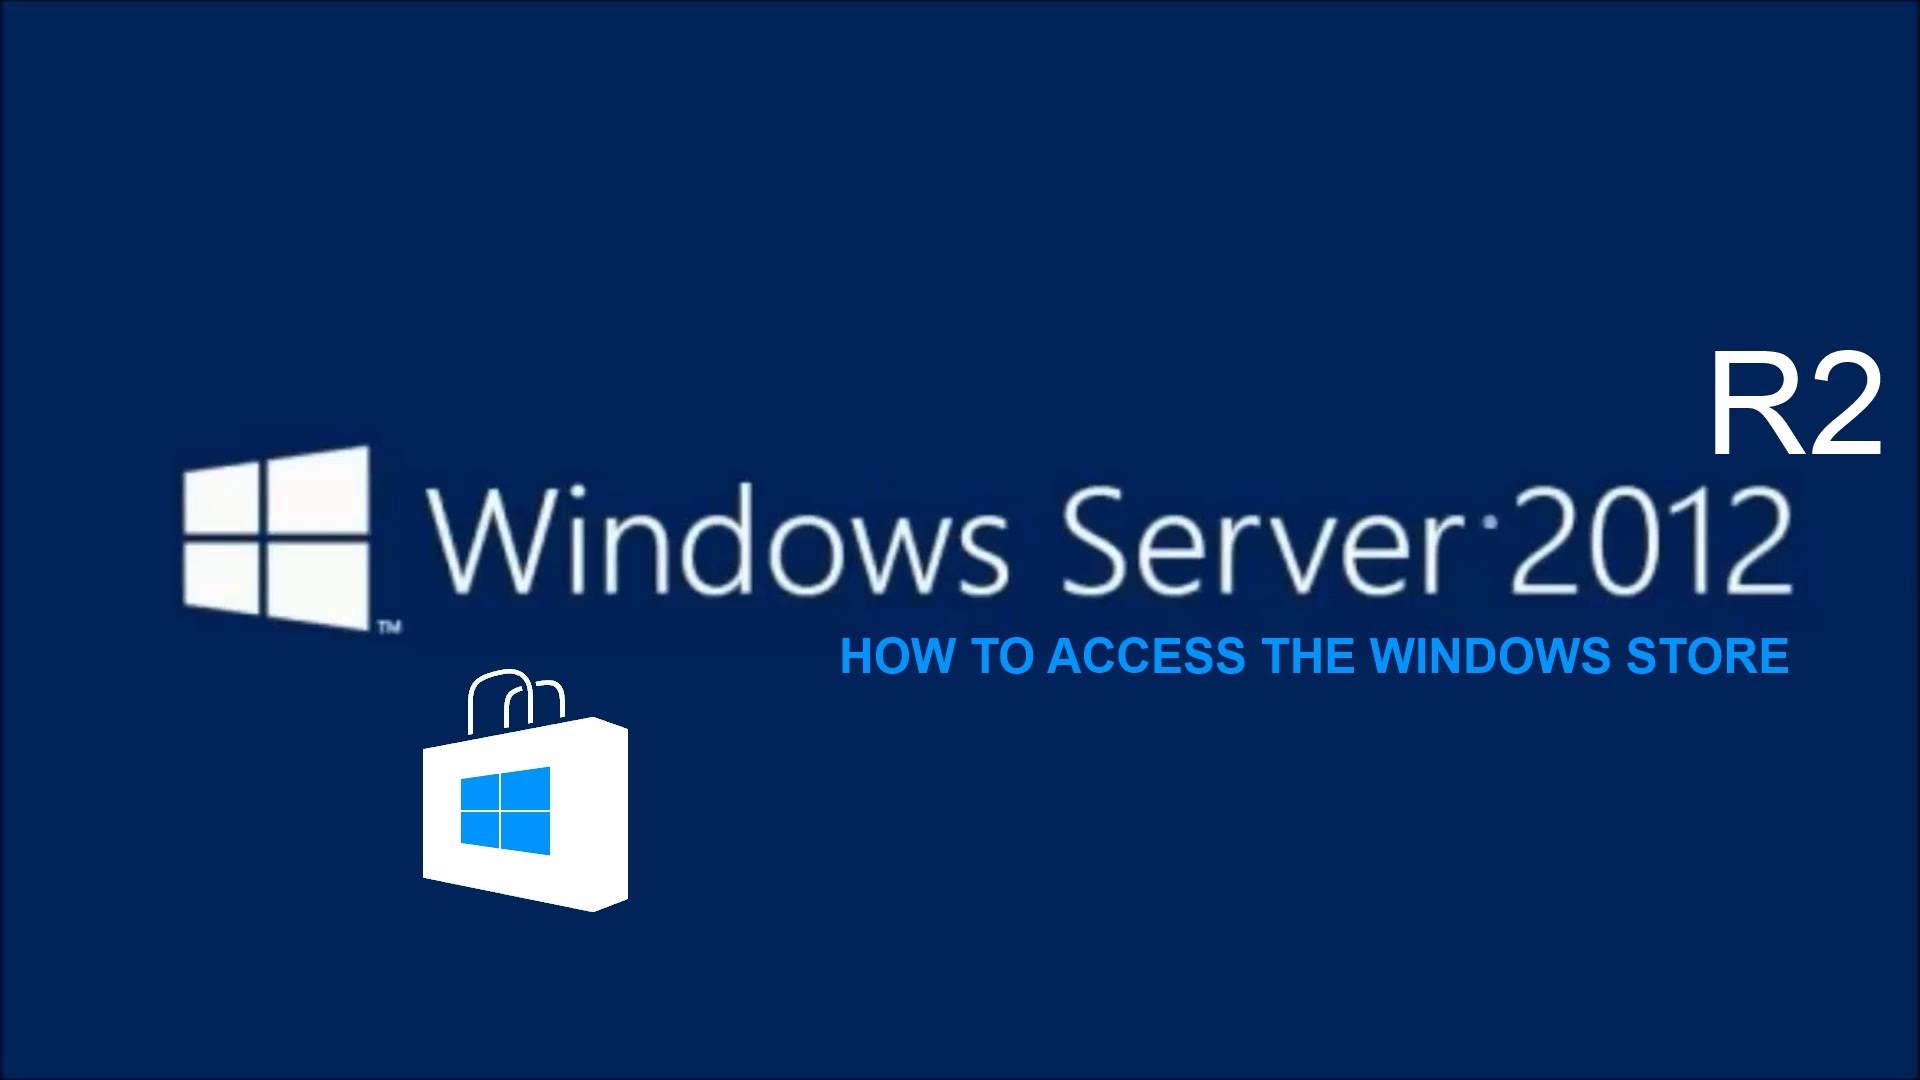 Презентация windows server